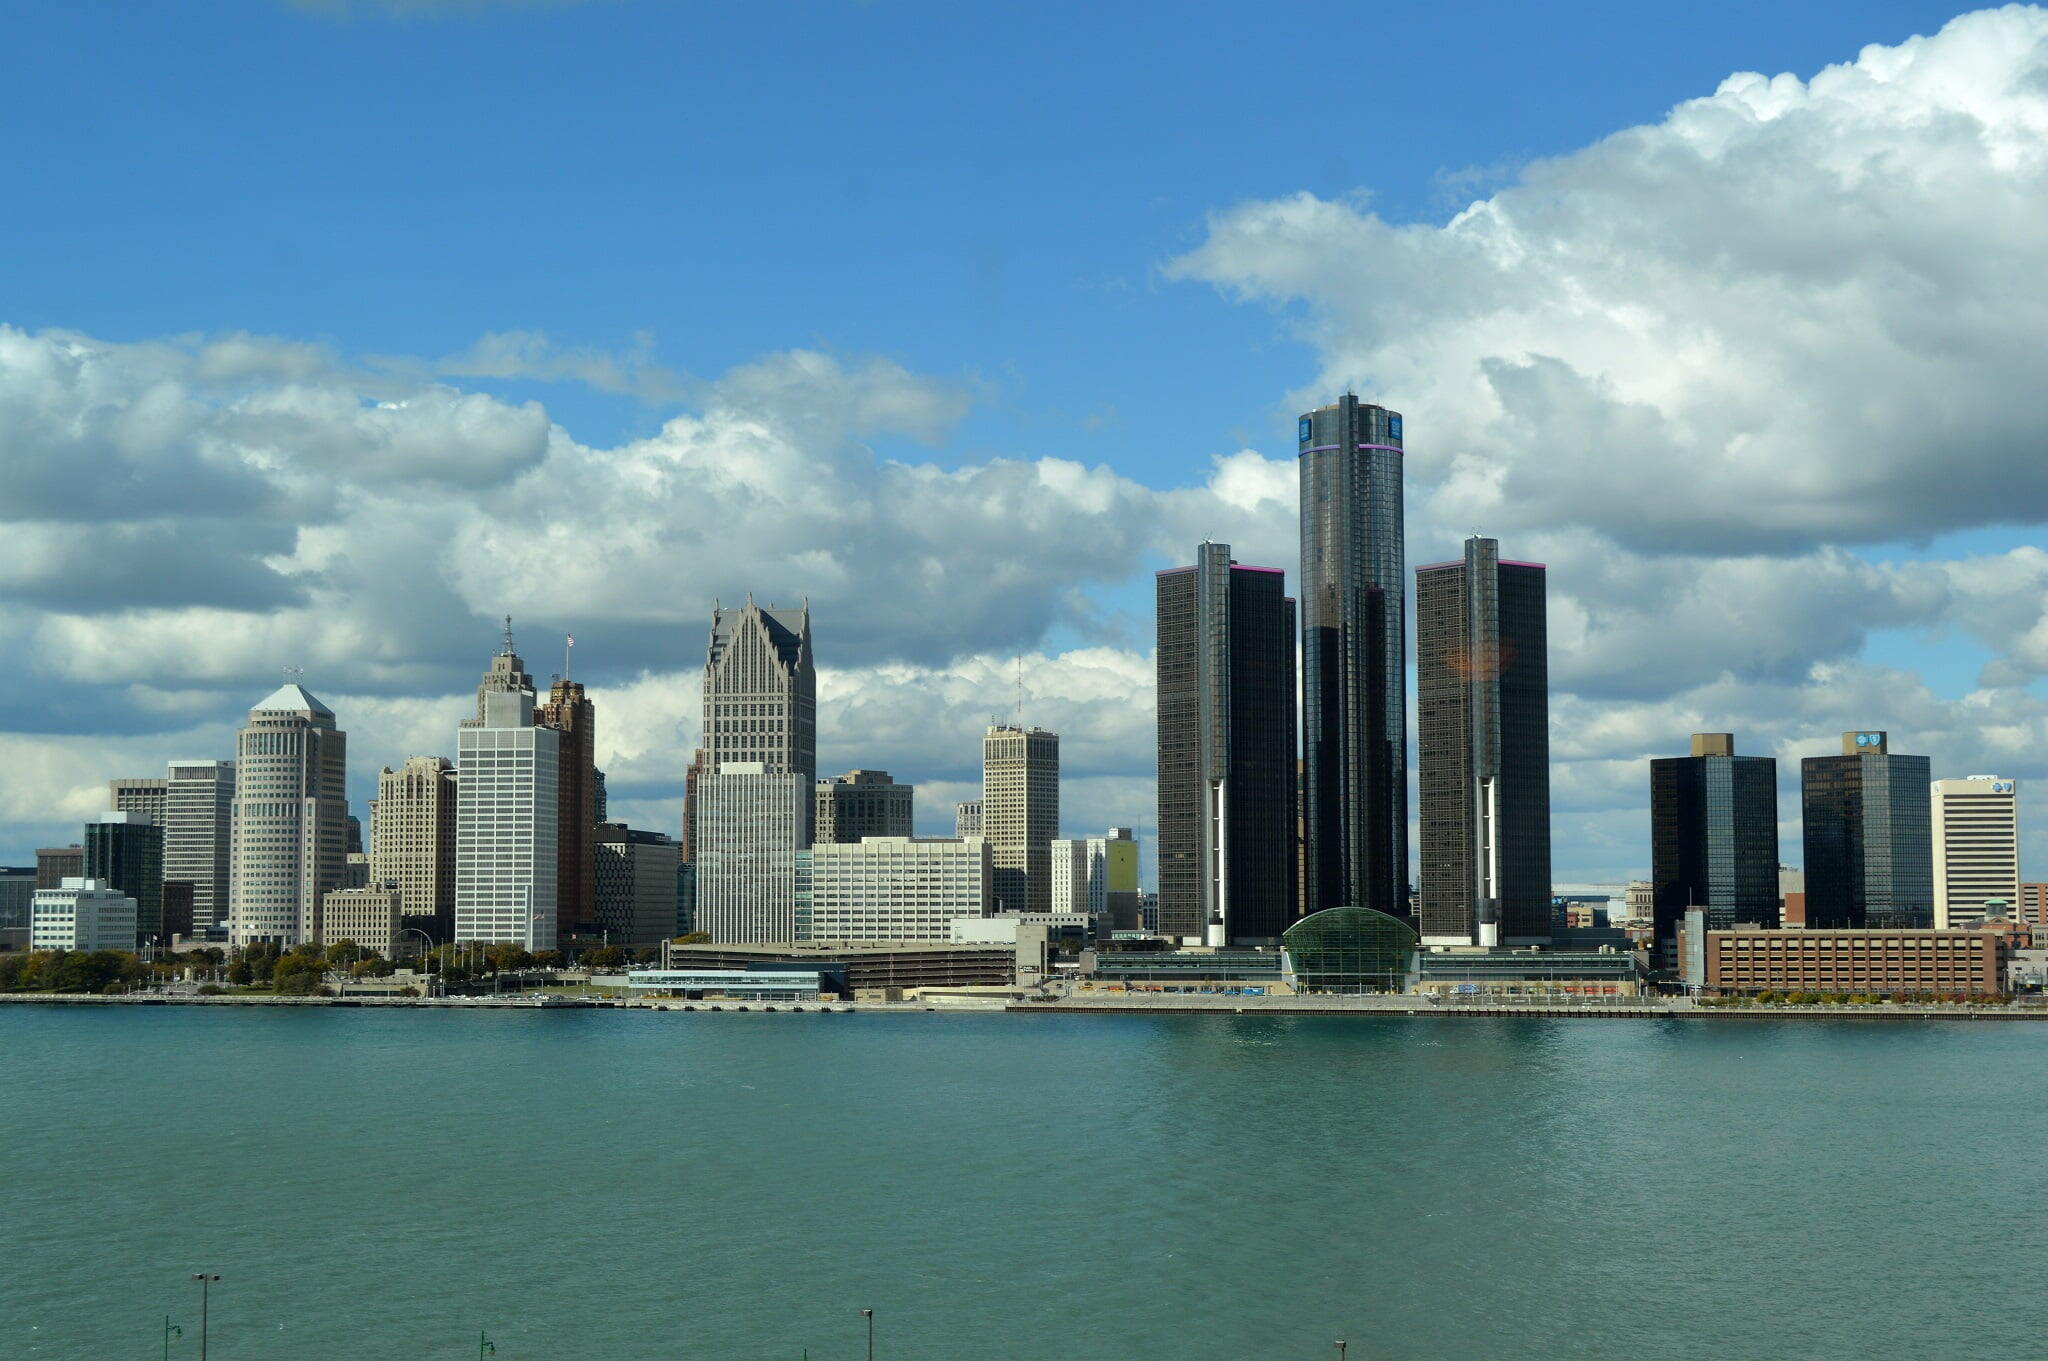 Detroit - Detroit, USA Taken From Windsor, Canada